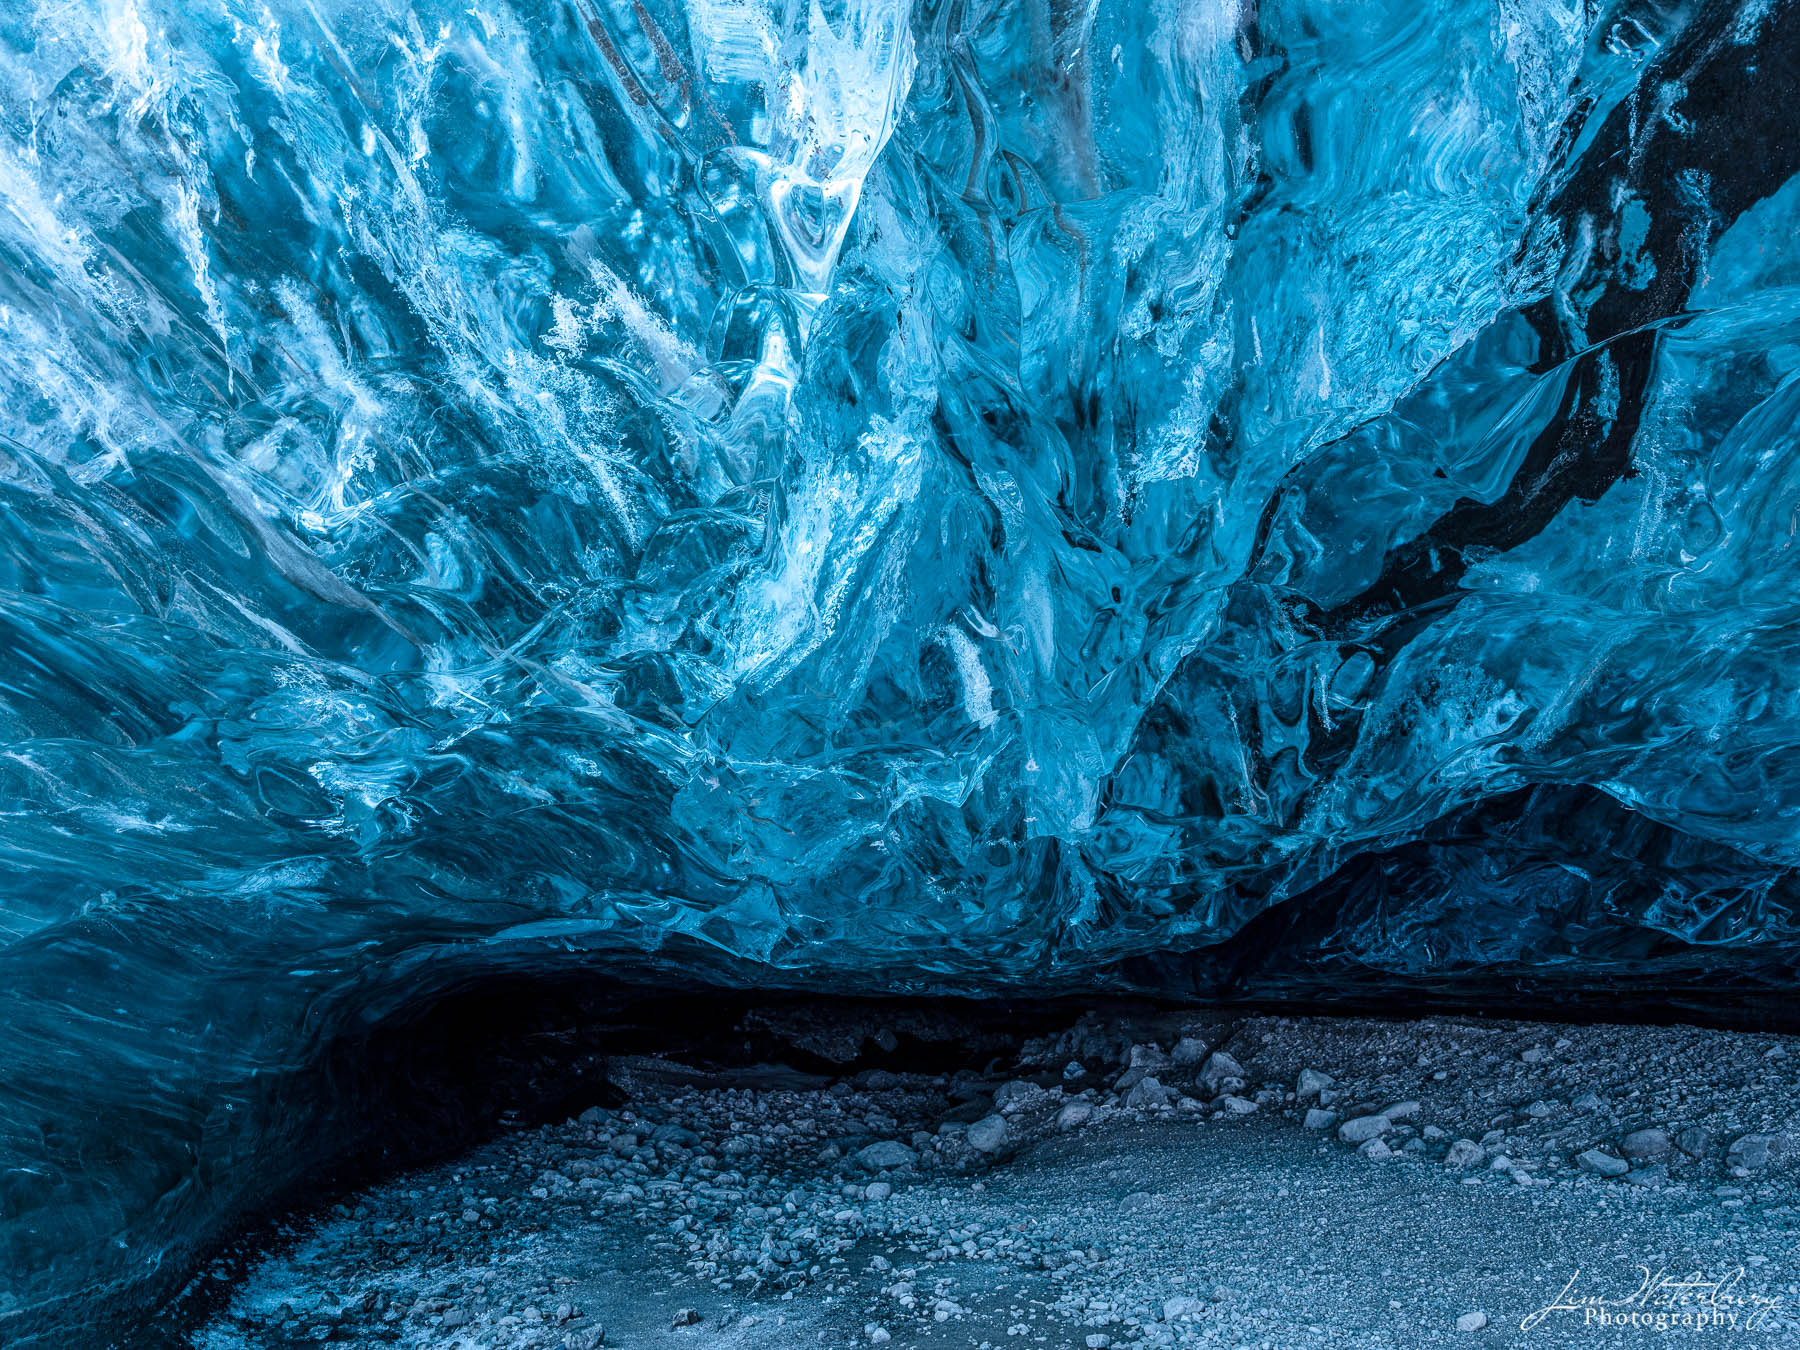 Blue ice at the entrance to an ice cave in the Breidarmerkurjokull outlet glacier (Vatnajokull), Iceland in winter.